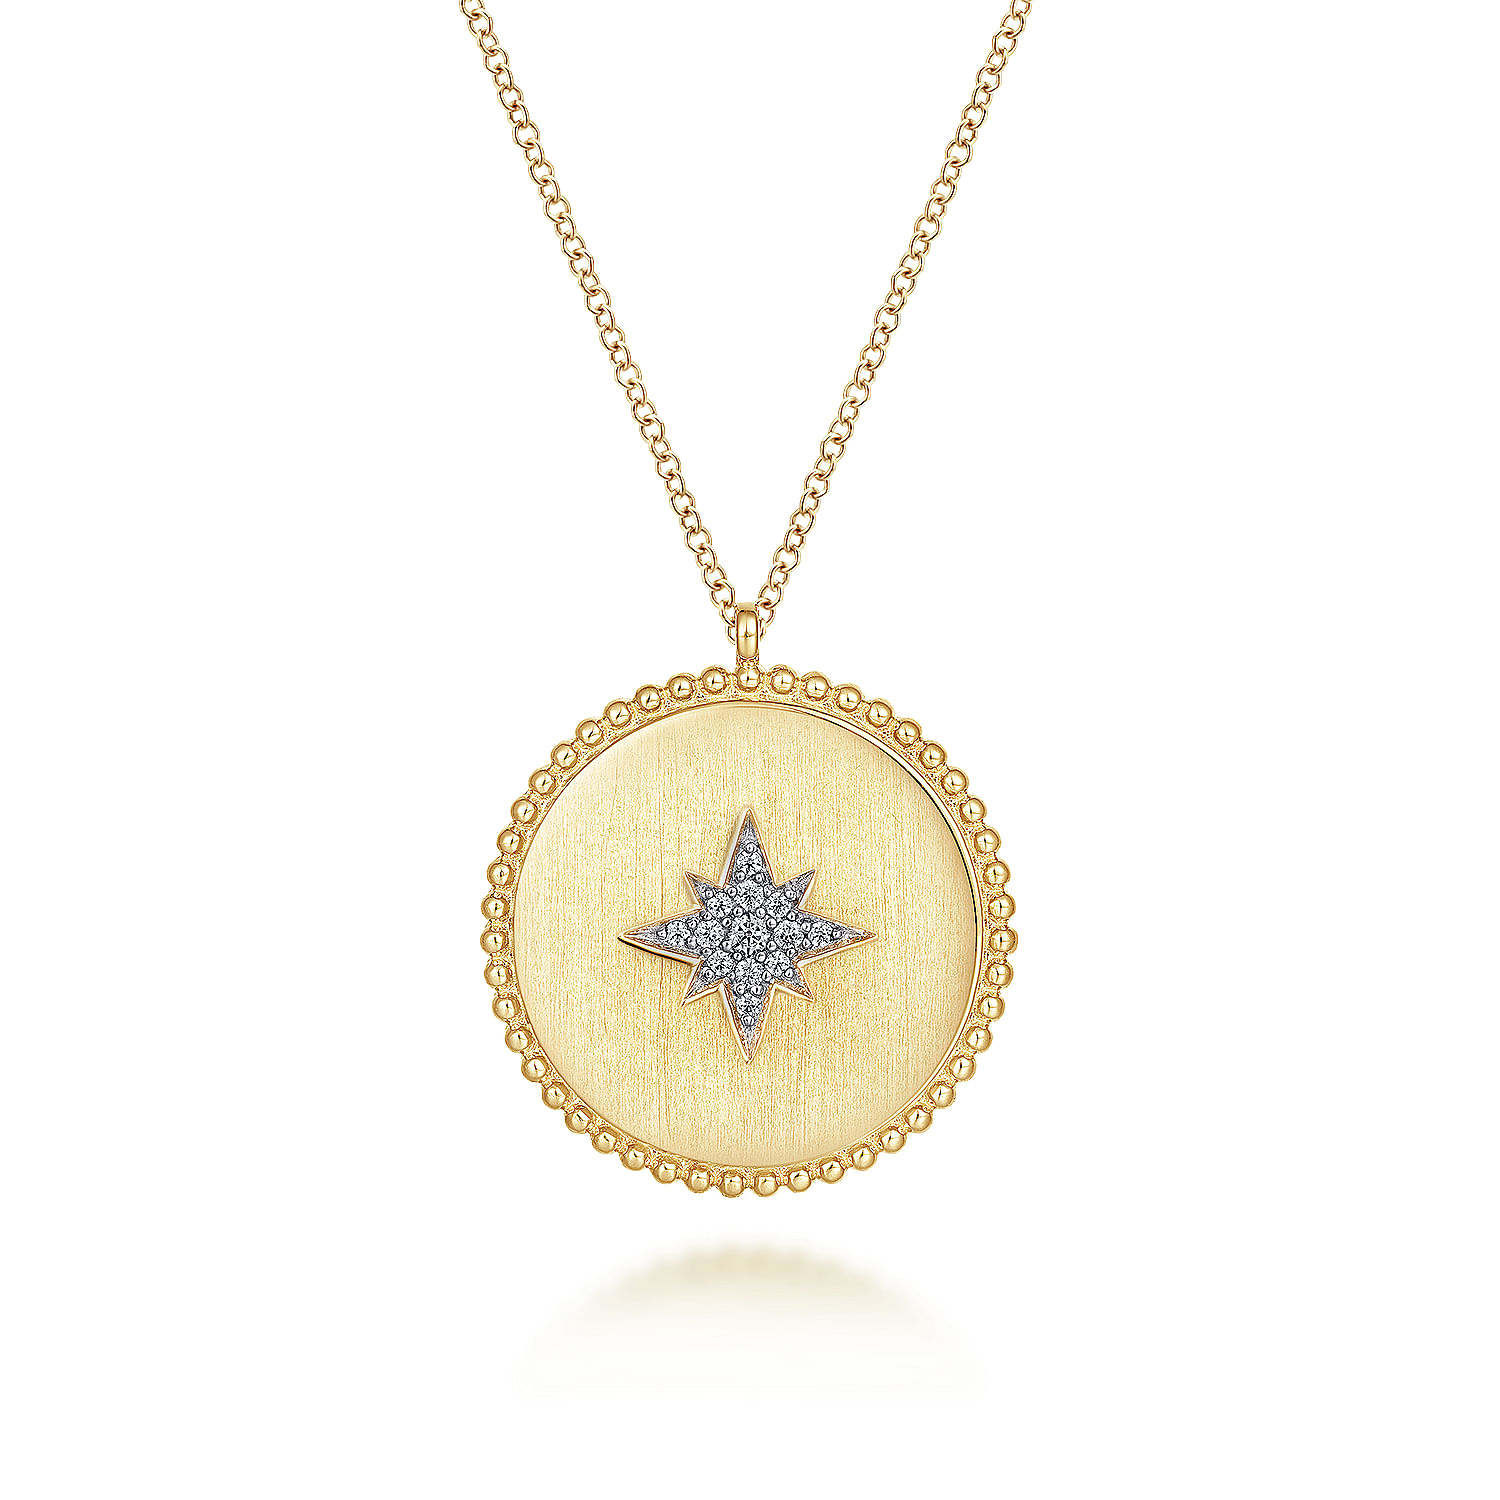 14K Yellow Gold Diamond Medallion Necklace with Diamond Star